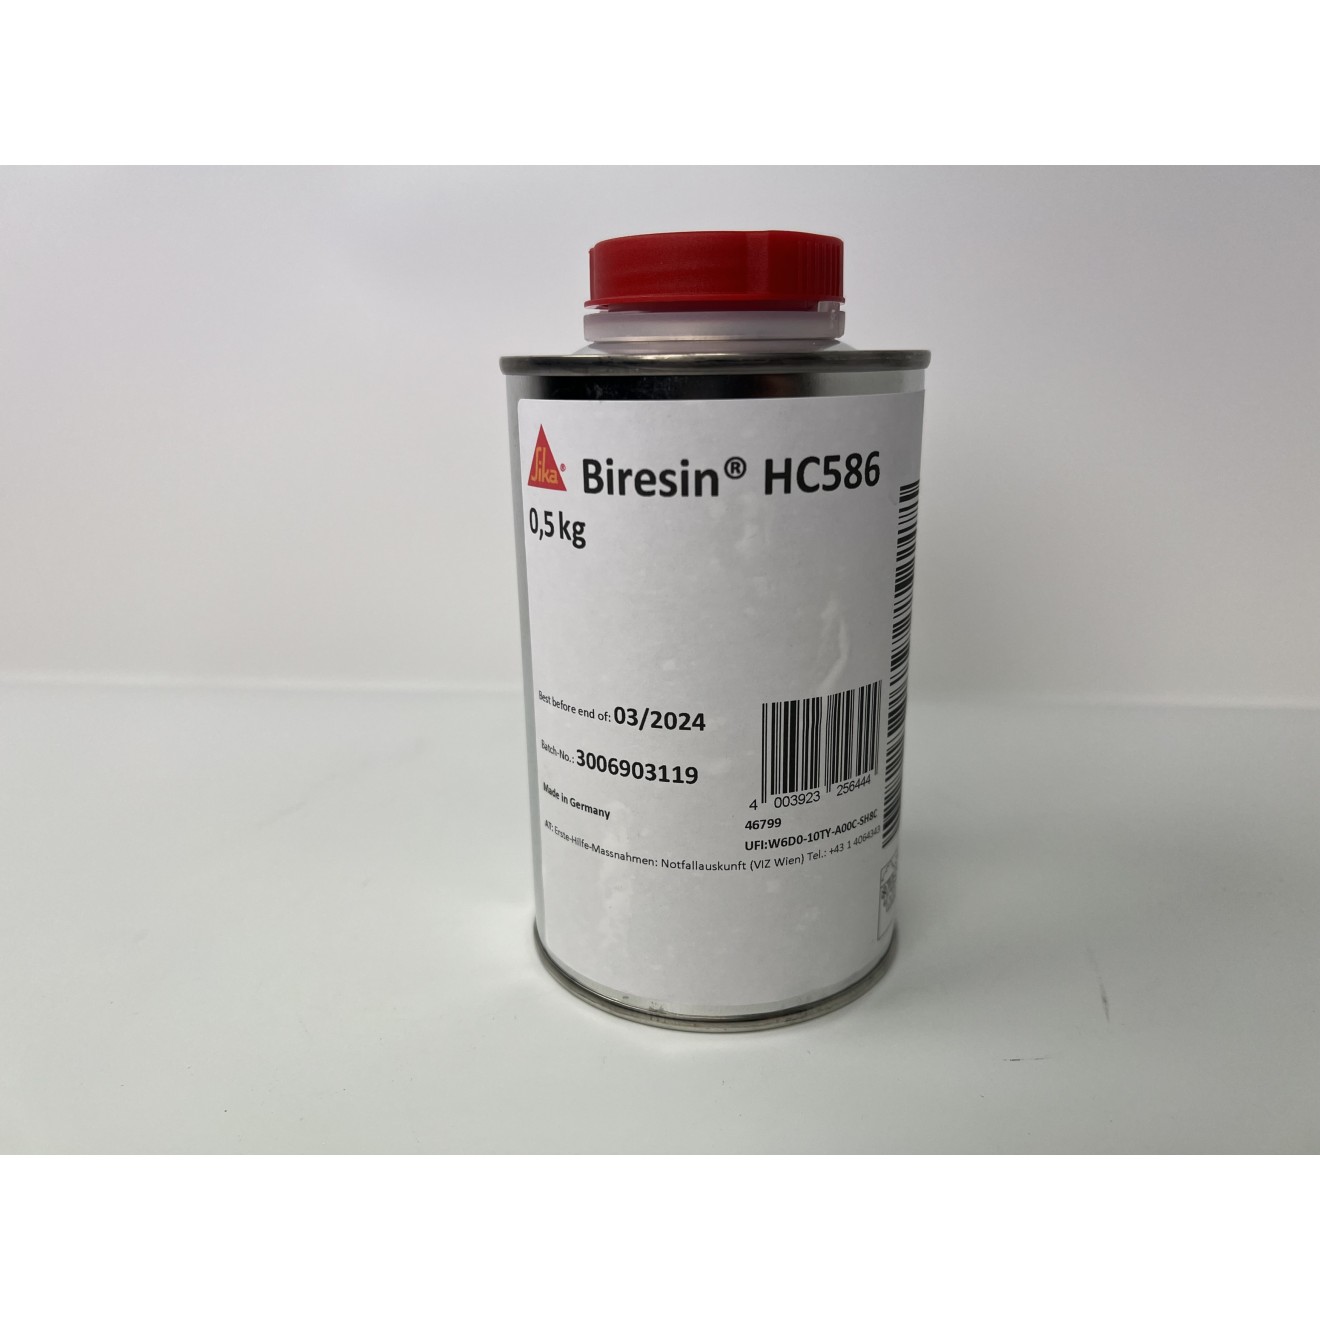 Biresin HC586 Aceleradore, 0,5kg